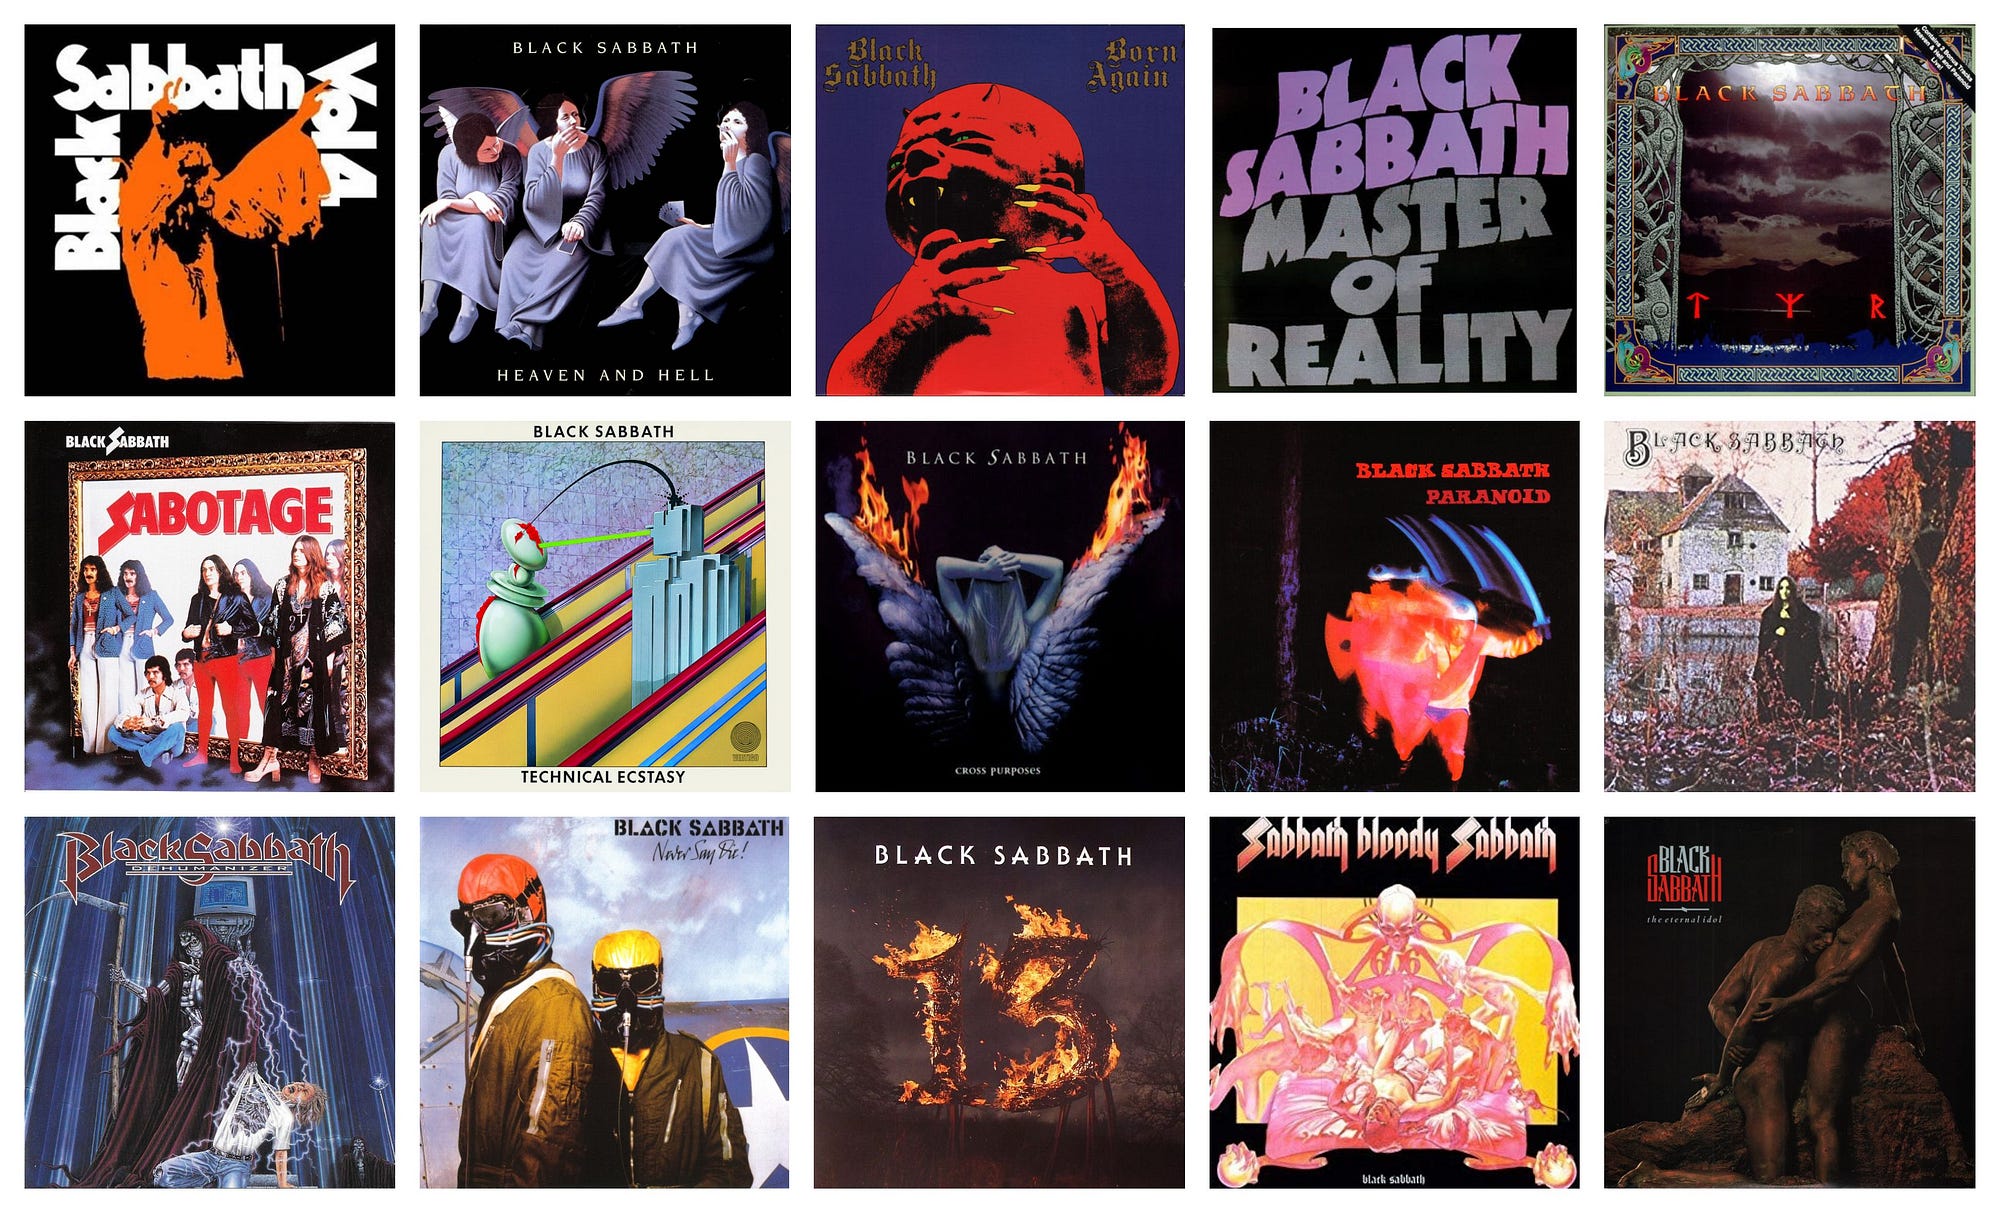 Black Sabbath Albums Ranked From Worst To Best | by Eddy Bamyasi | 6 Album  Sunday | Medium